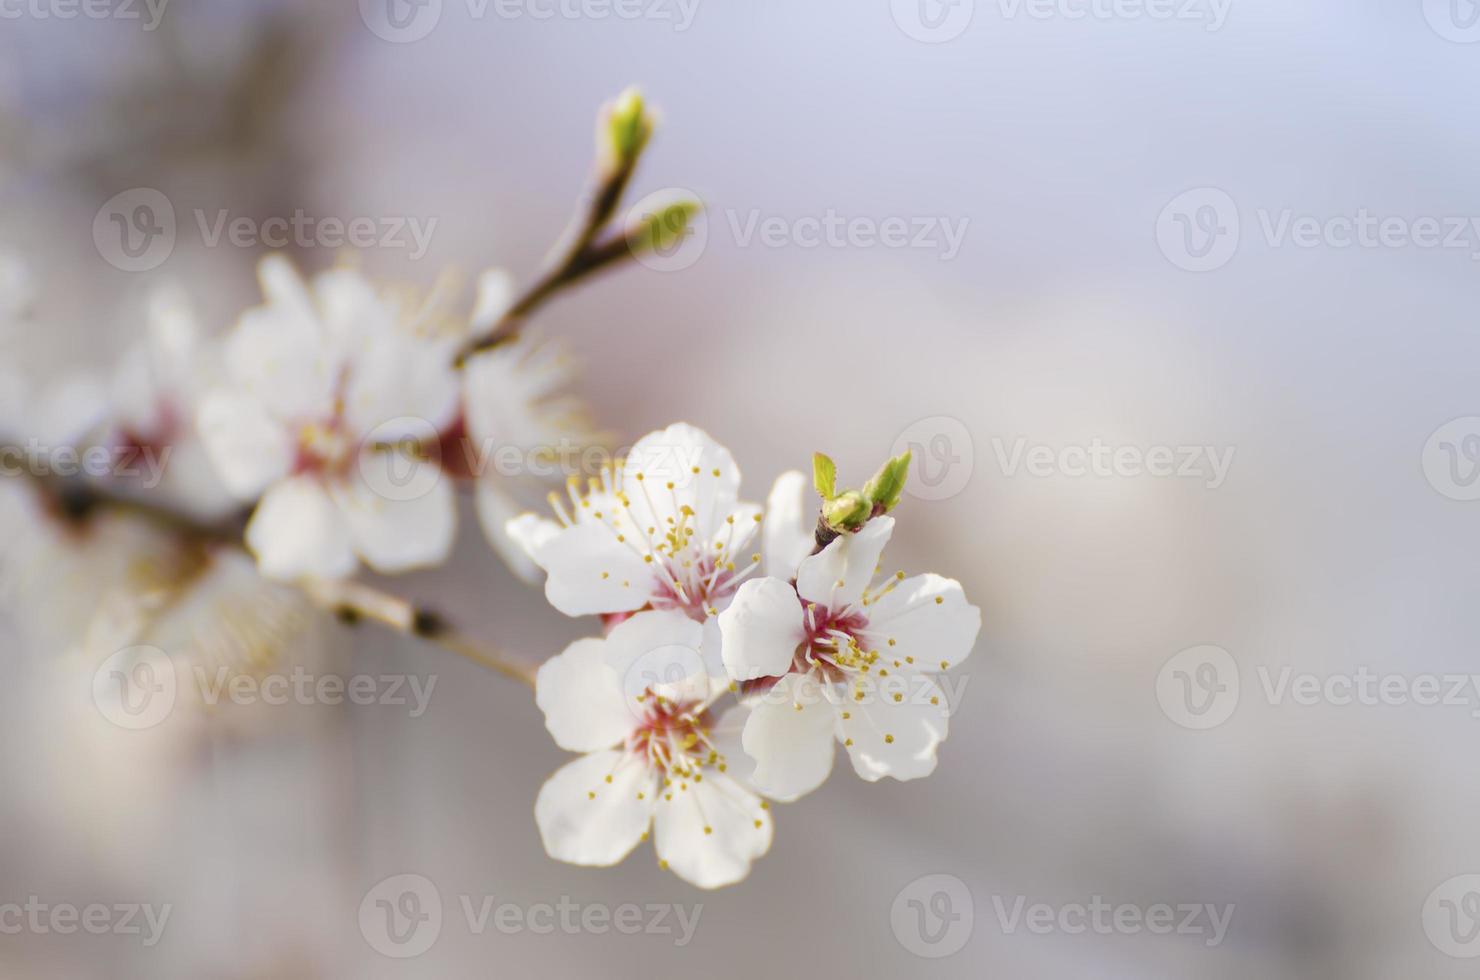 abrikozenboom bloem foto